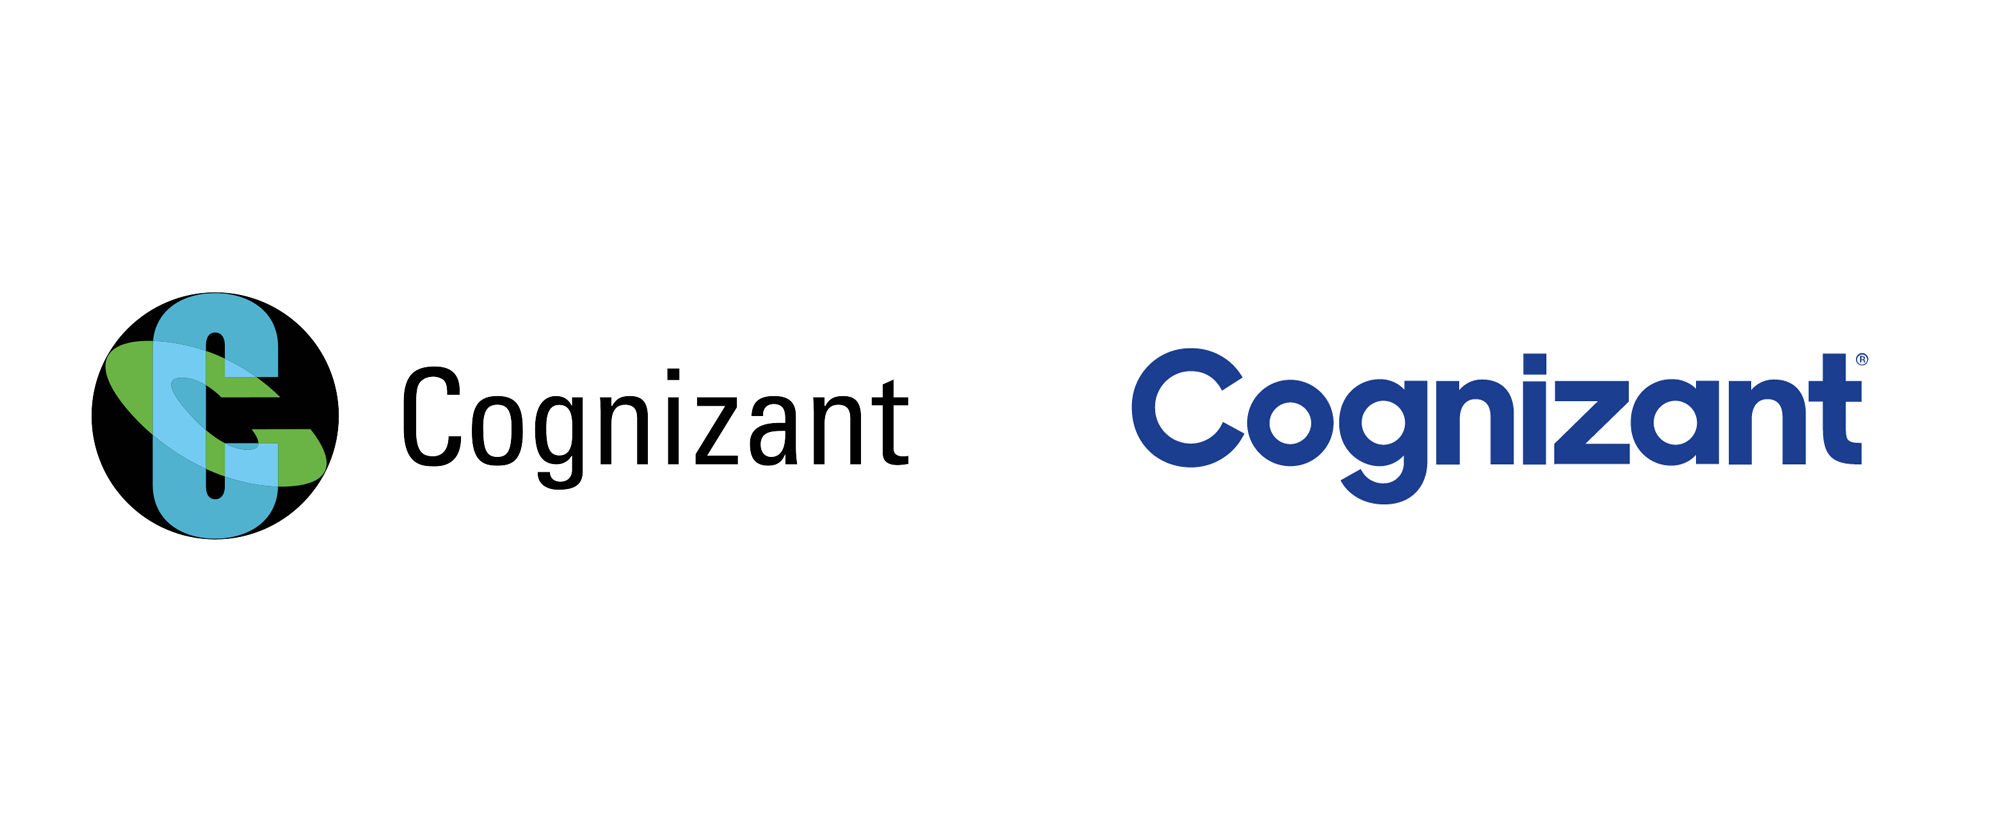 Cognizant Logo - Brand New: New Logo for Cognizant